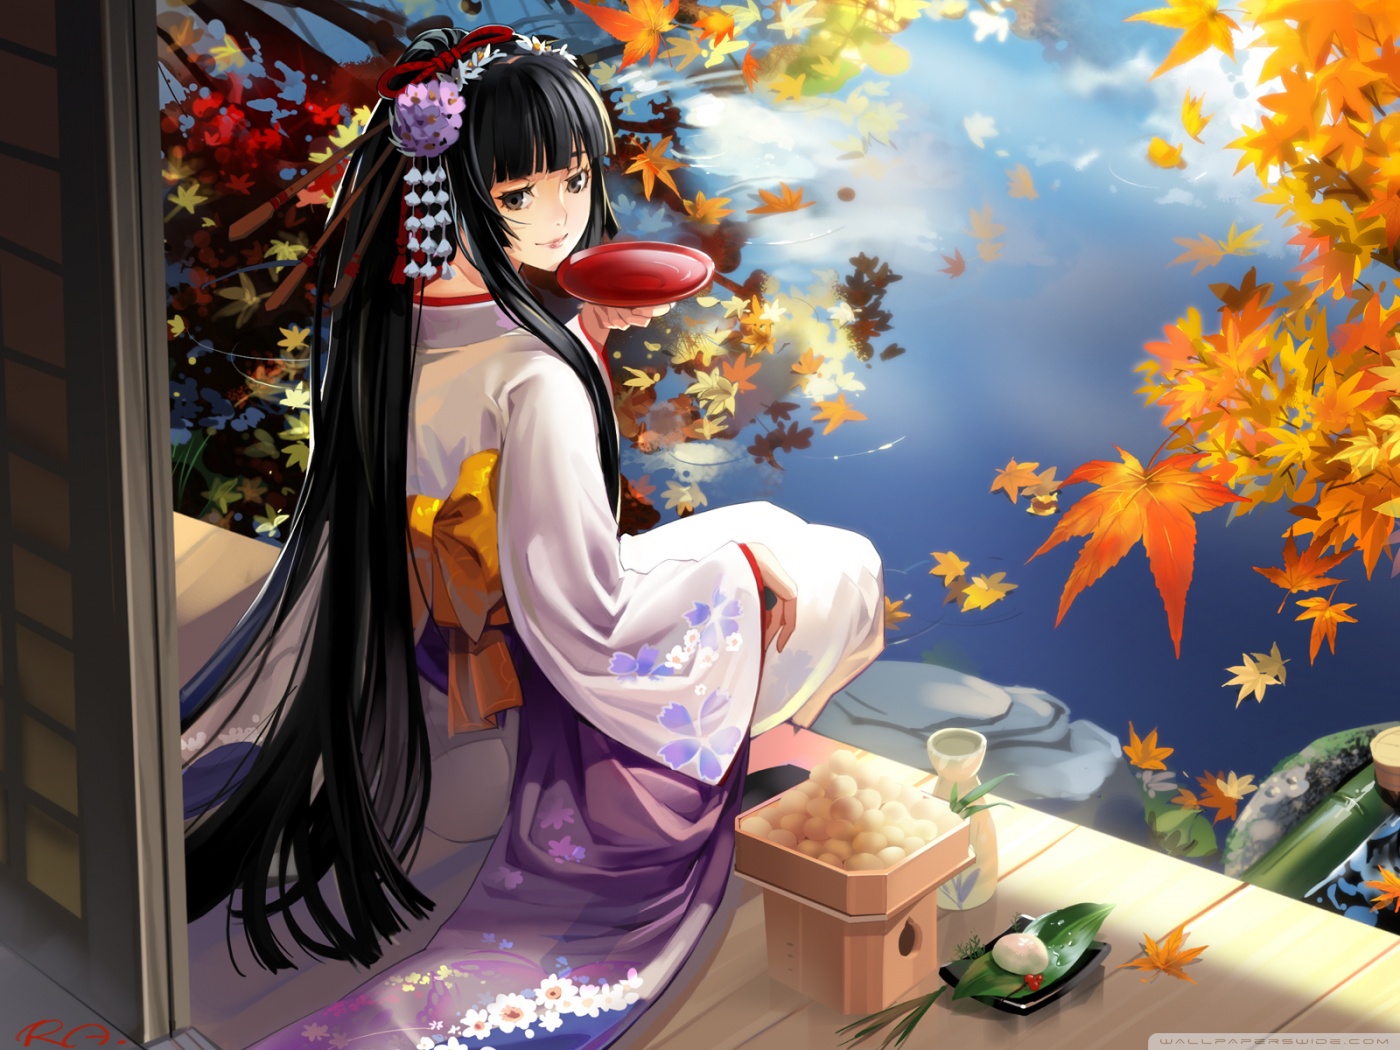 Autumn Anime Scenery Ultra Hd Desktop Background Wallpaper For Widescreen Ultrawide Desktop Laptop